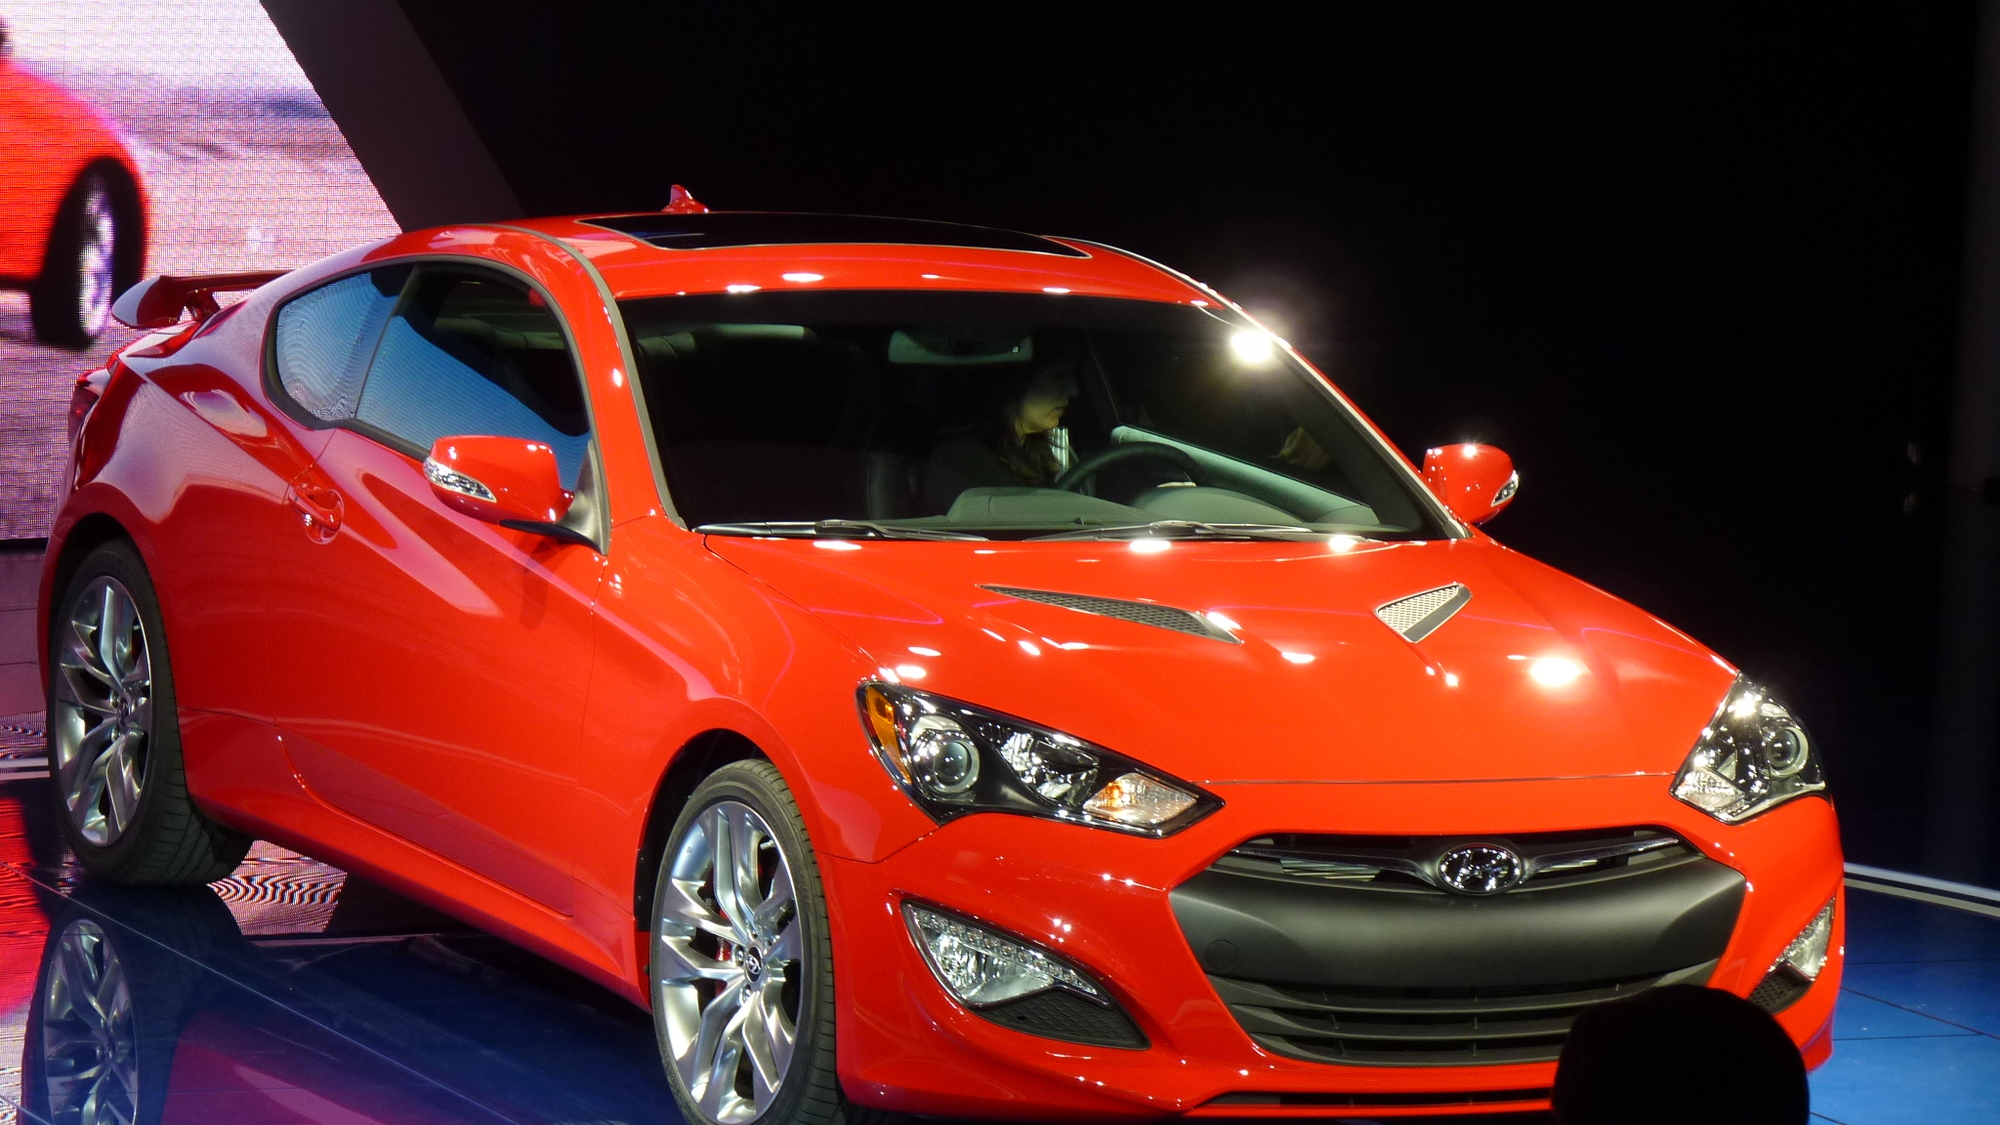 2013 Hyundai Genesis Coupe  -  2012 Detroit Auto Show